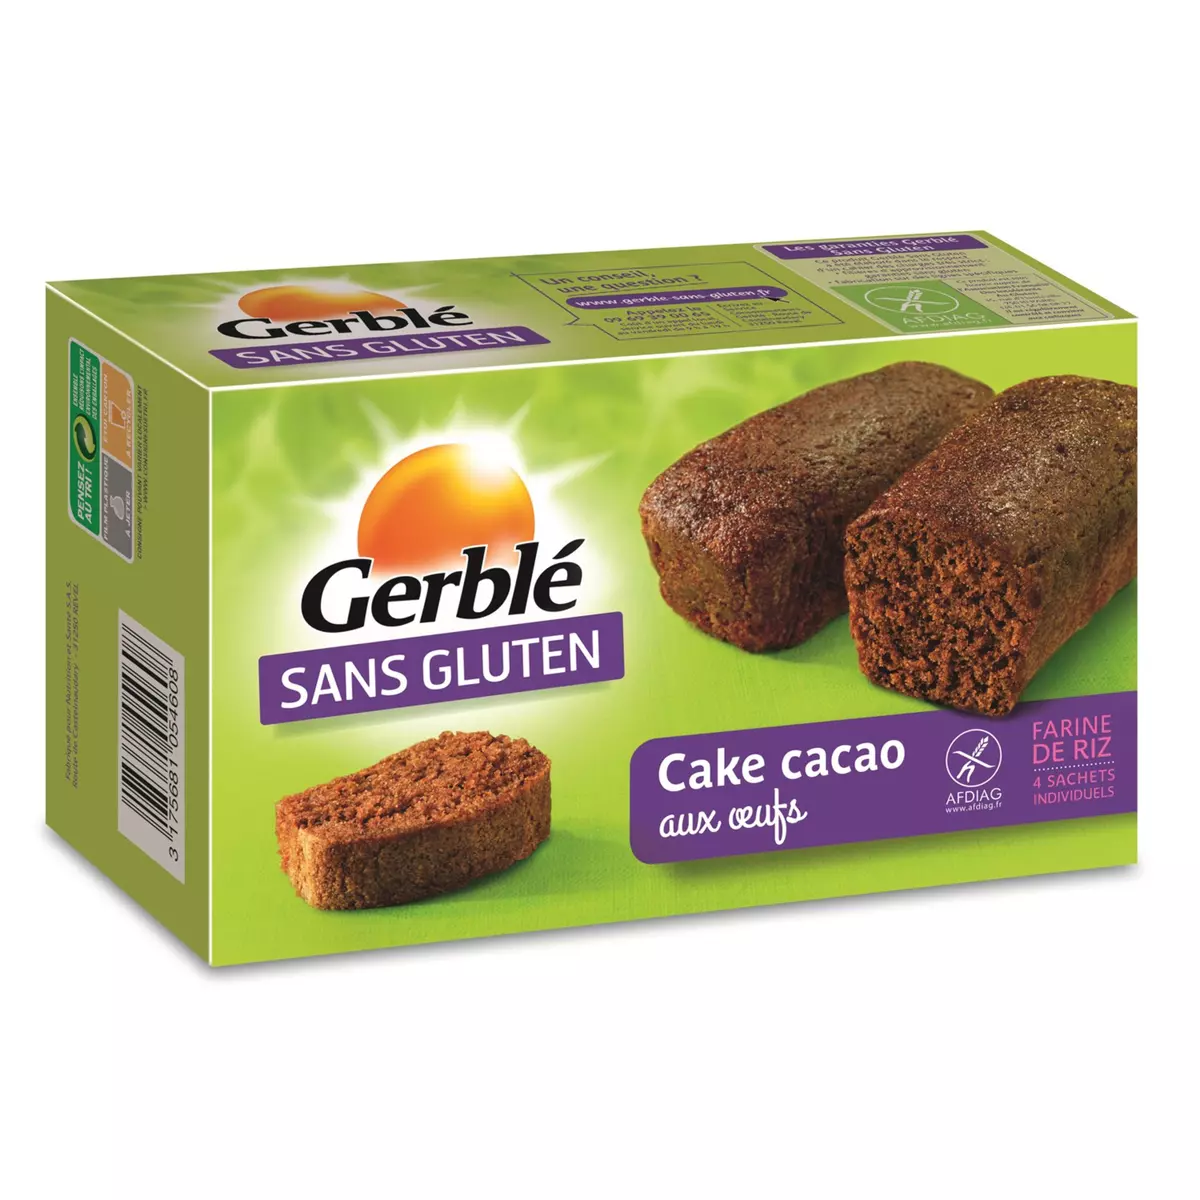 GERBLE Gerblé sans gluten cake cacao 180g